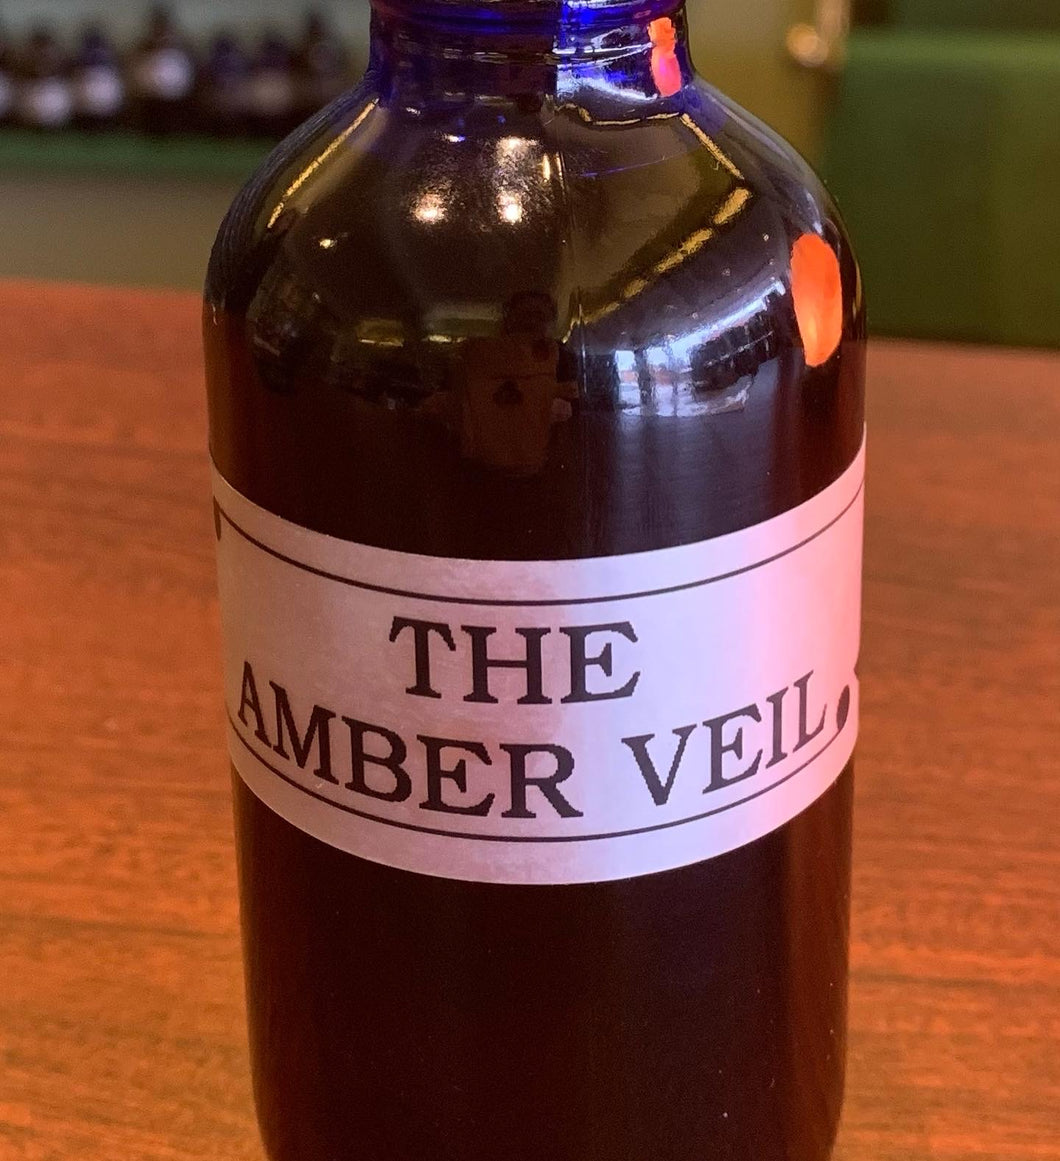 The Amber Veil